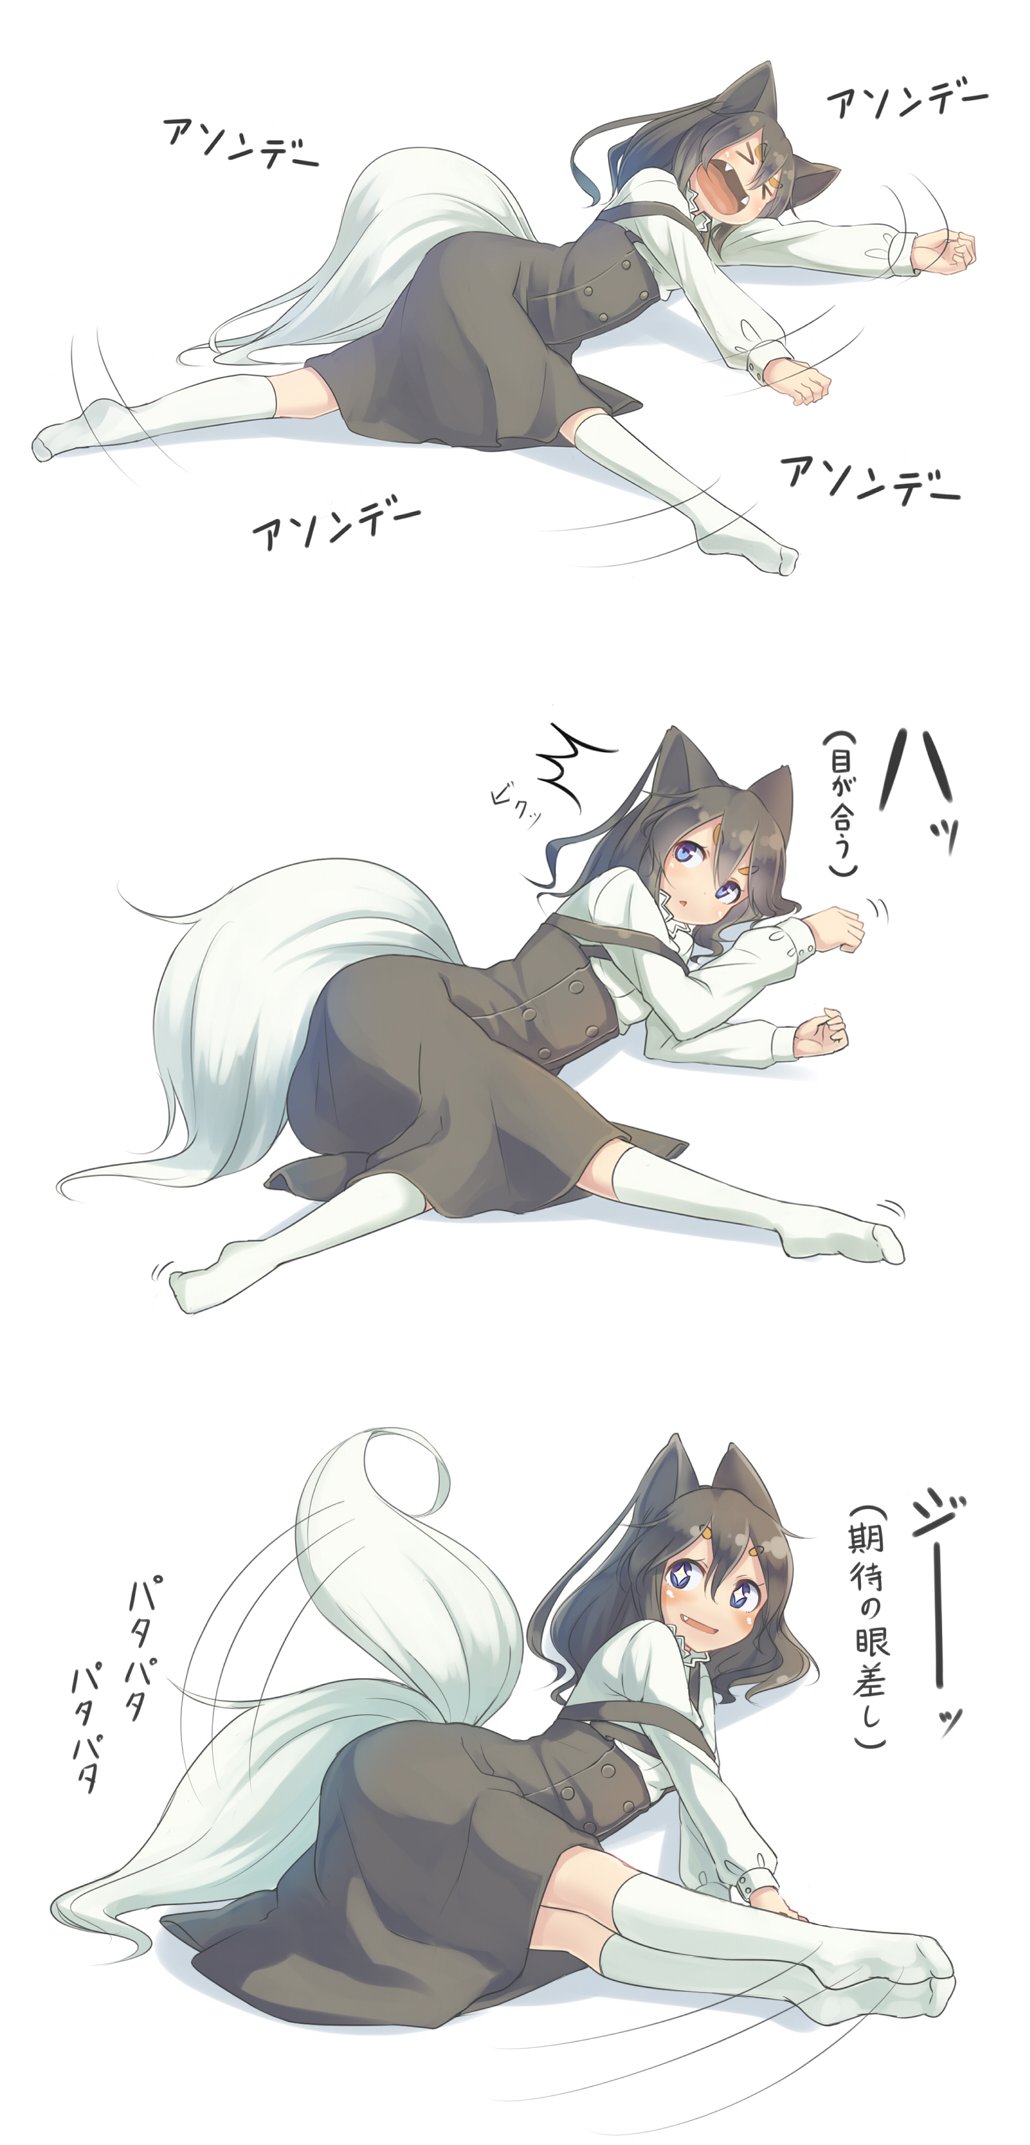 imgur.com  Anime girl drawings, Cute drawings, Anime wolf girl